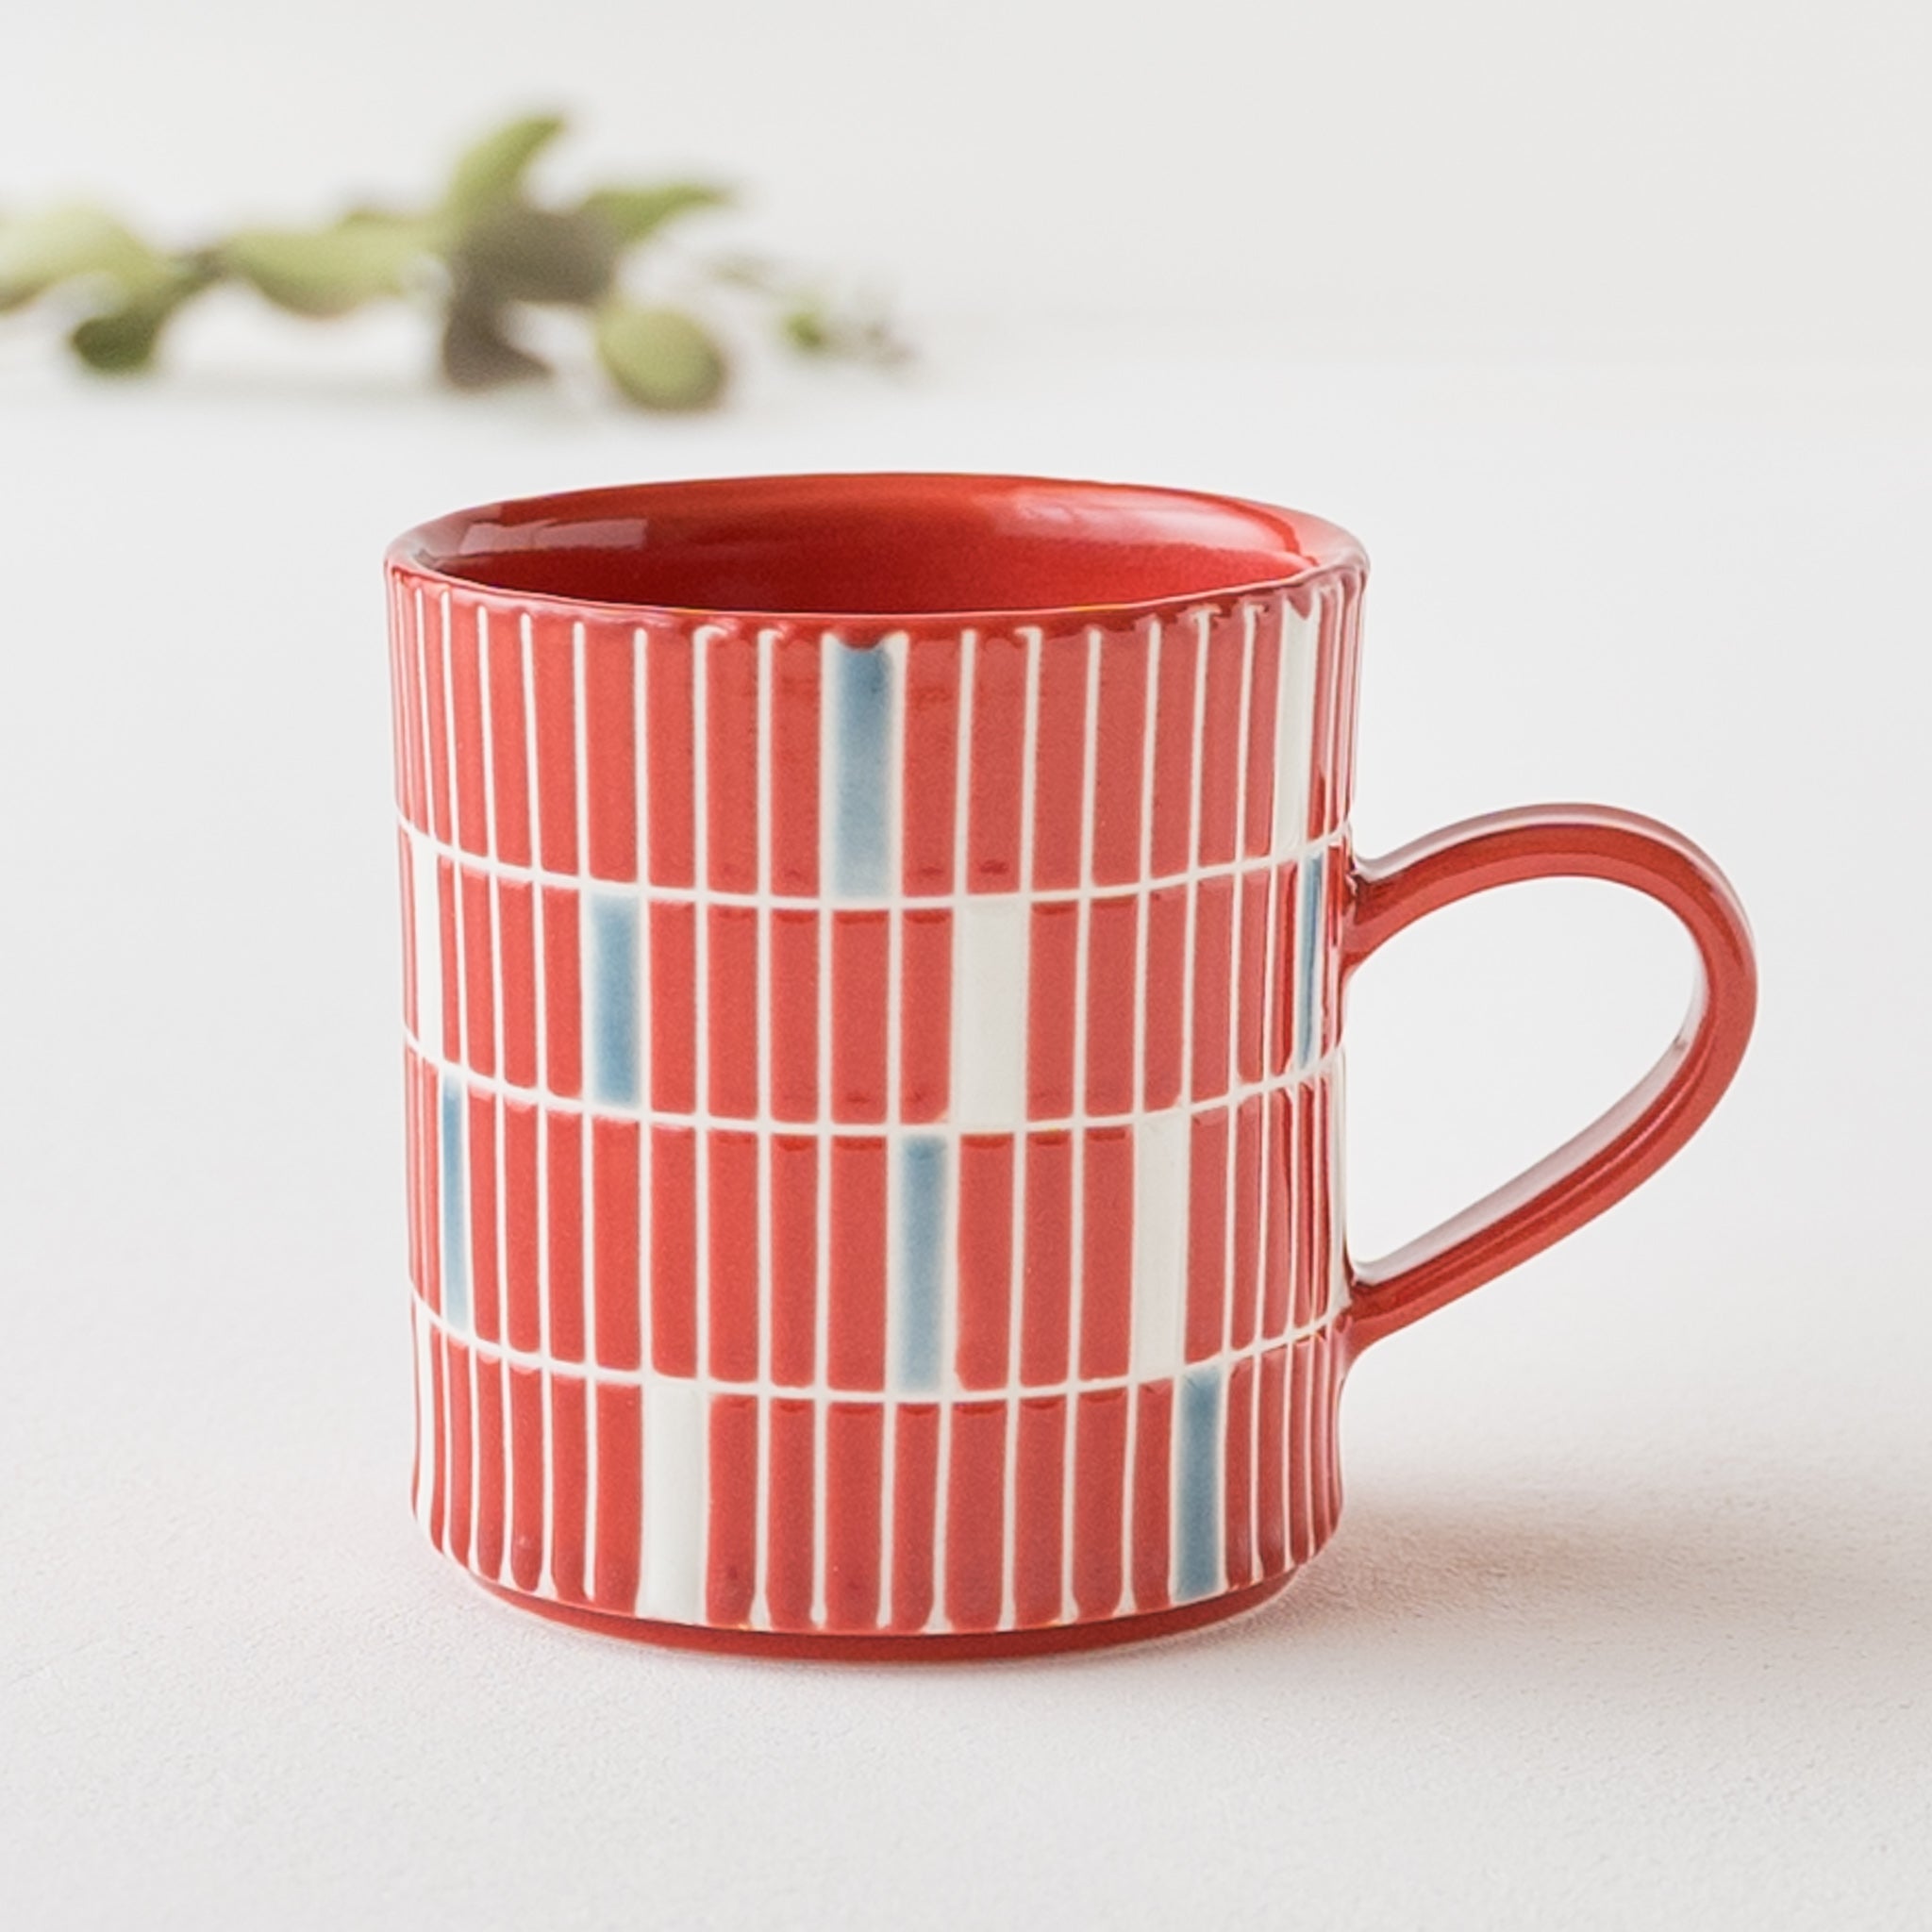 Yukari Nakagawa's Mosaic Tile Mug with Pop Red